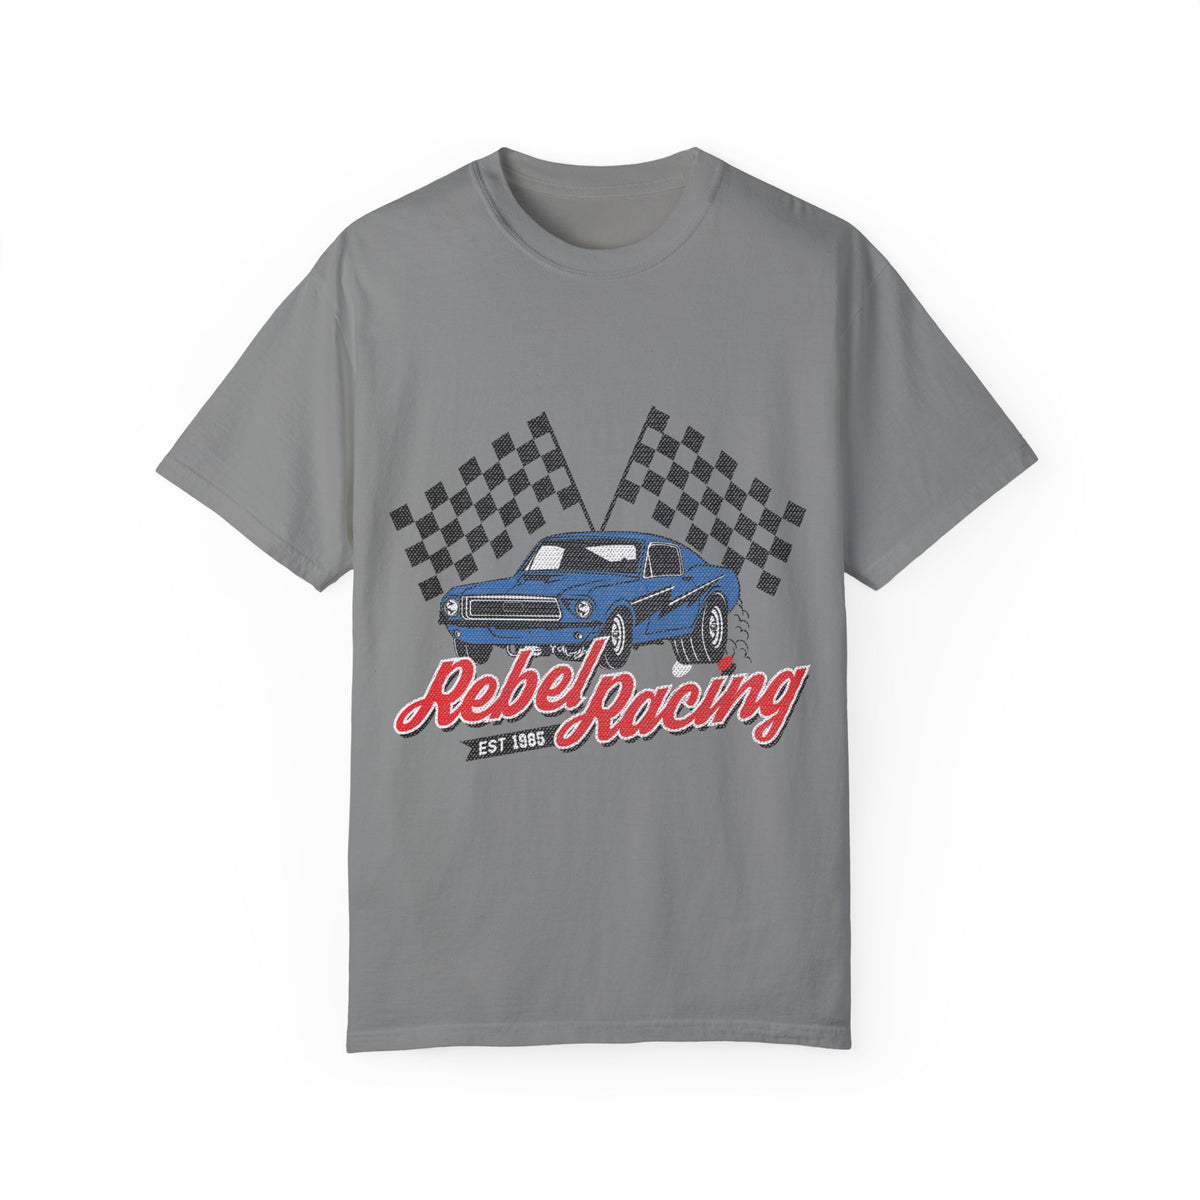 Rebel Racing Vintage Car T-shirt | Vintage Graphic Tee | Comfort Colors